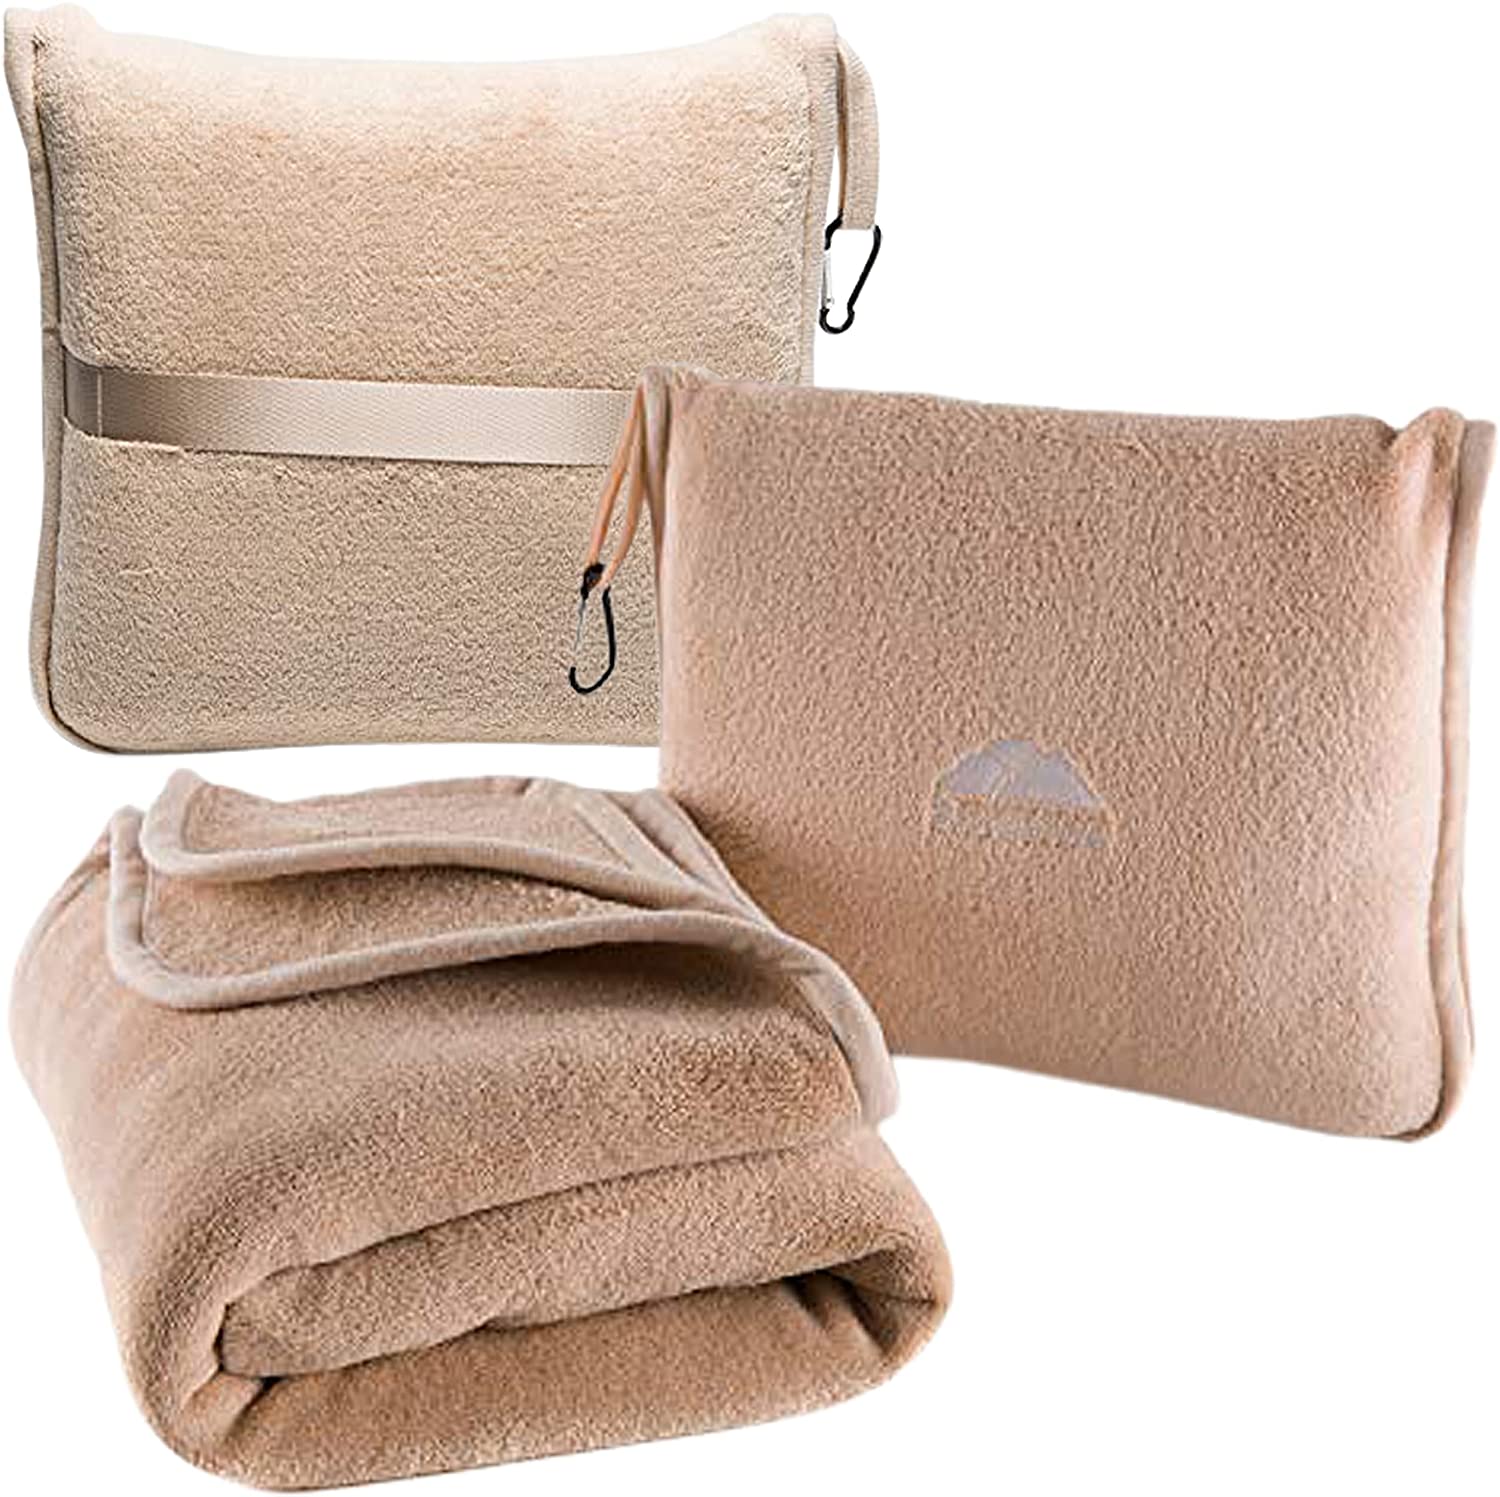 Useful travel gifts BlueHills Premium Soft Travel Blanket Pillow Airplane Blanket